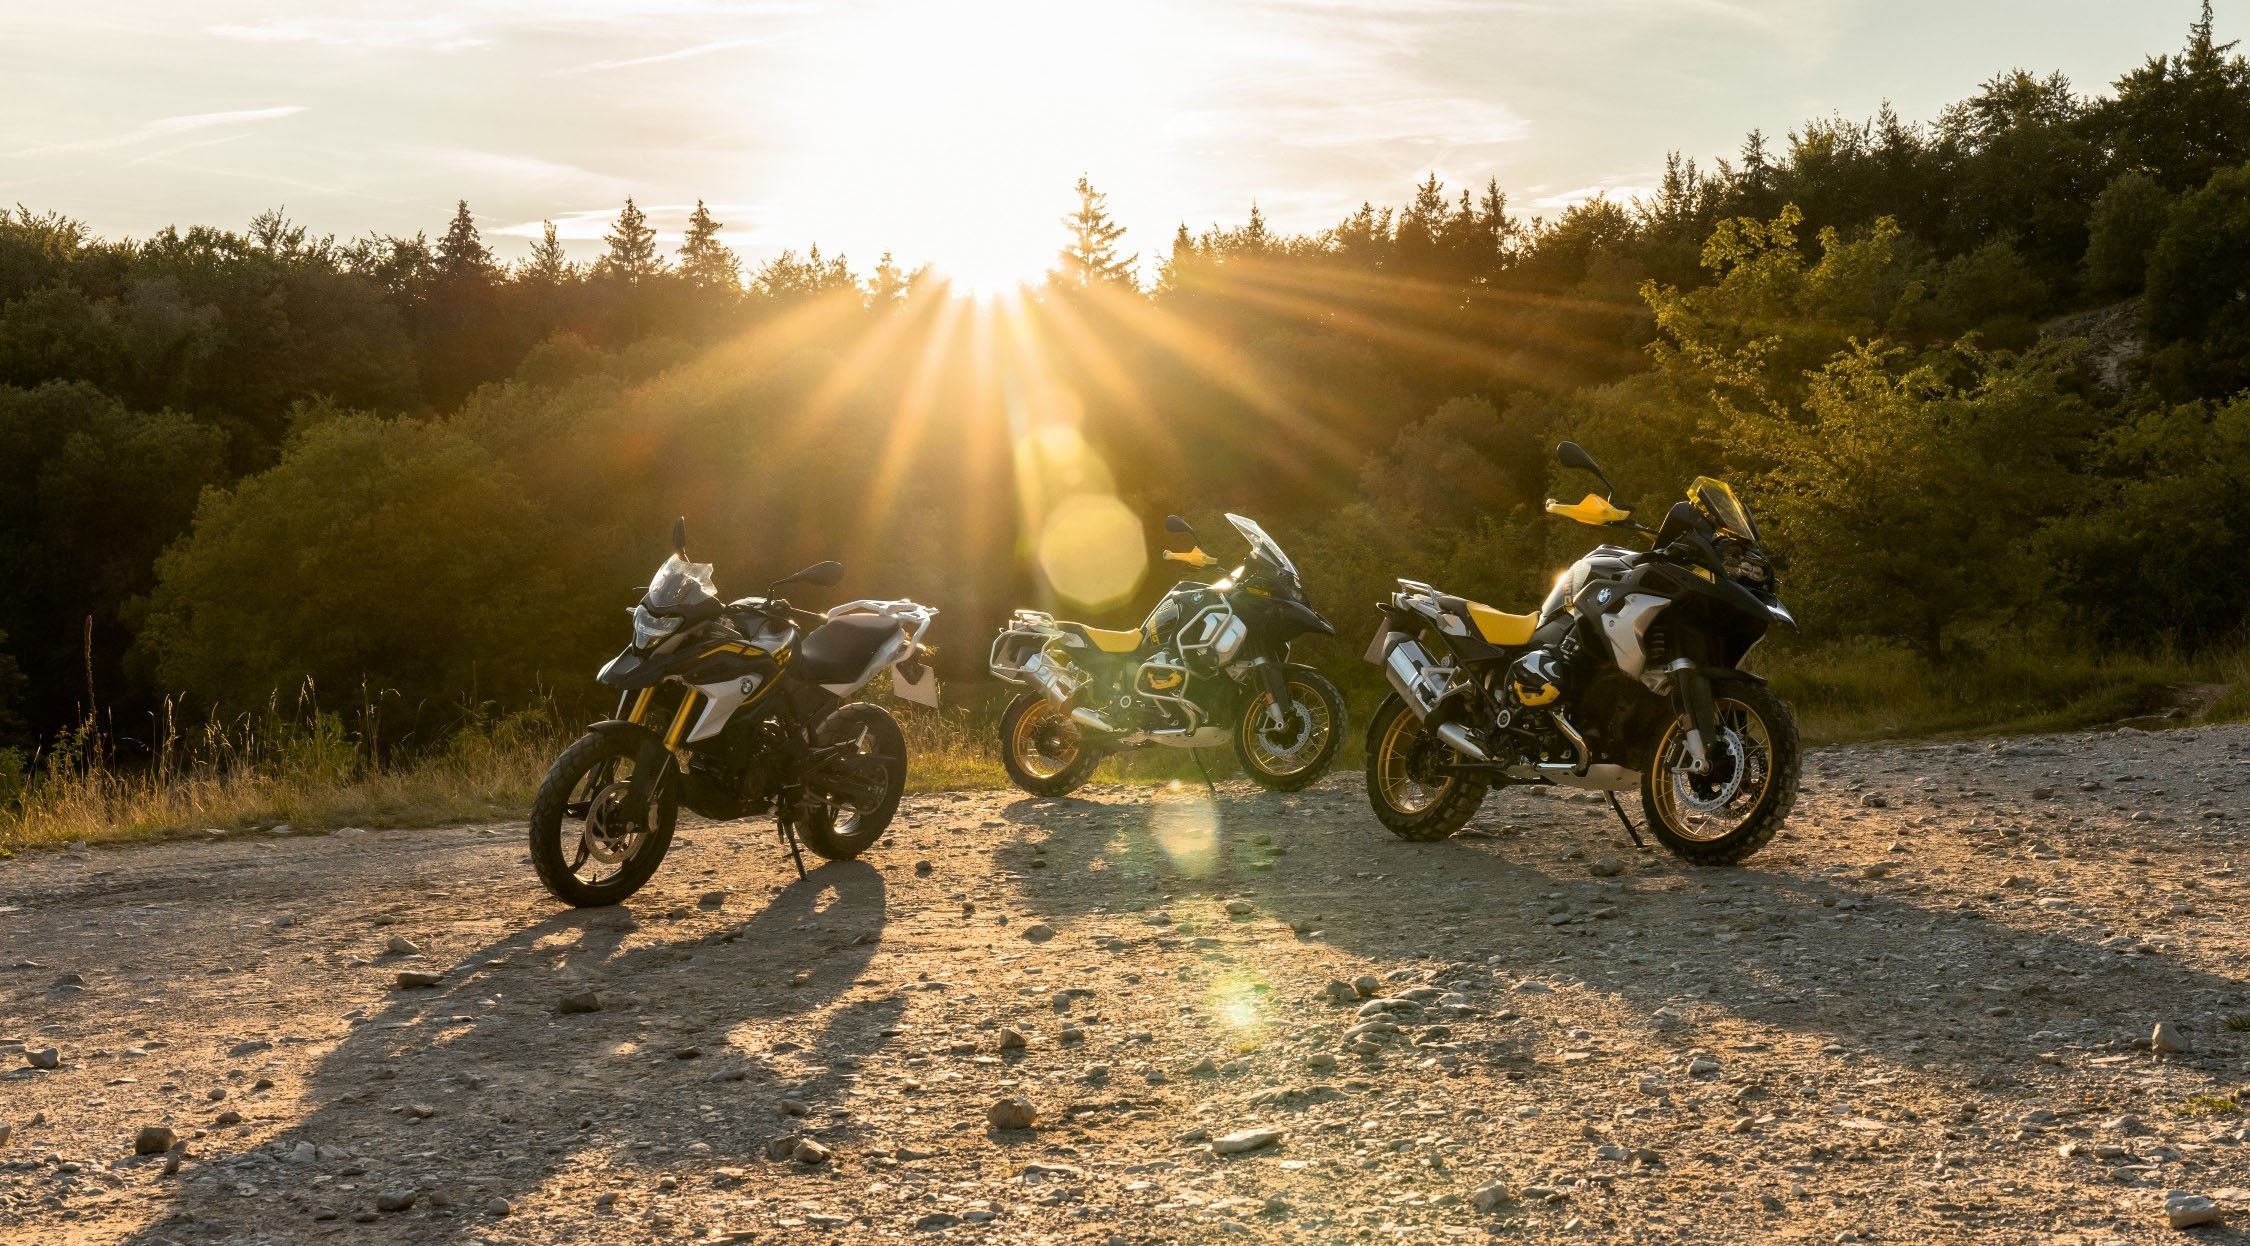 BMW Adventure motorcycles parked on enduro terrain